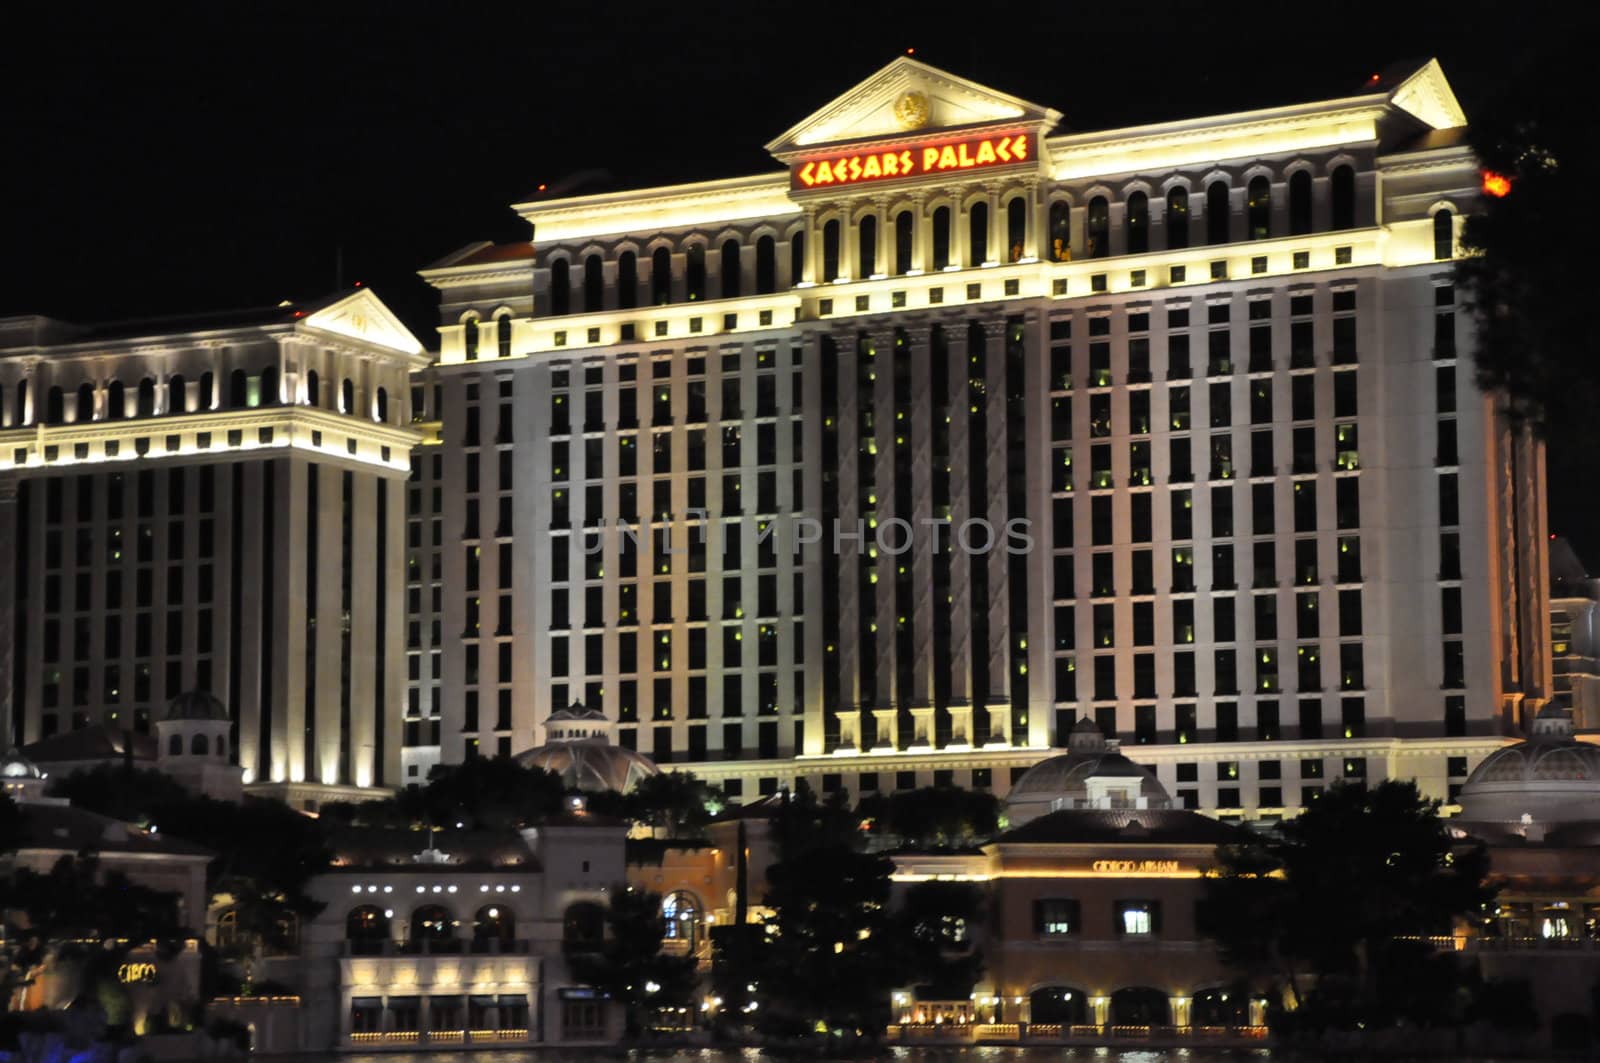 Caesars Palace Hotel and Casino in Las Vegas by sainaniritu